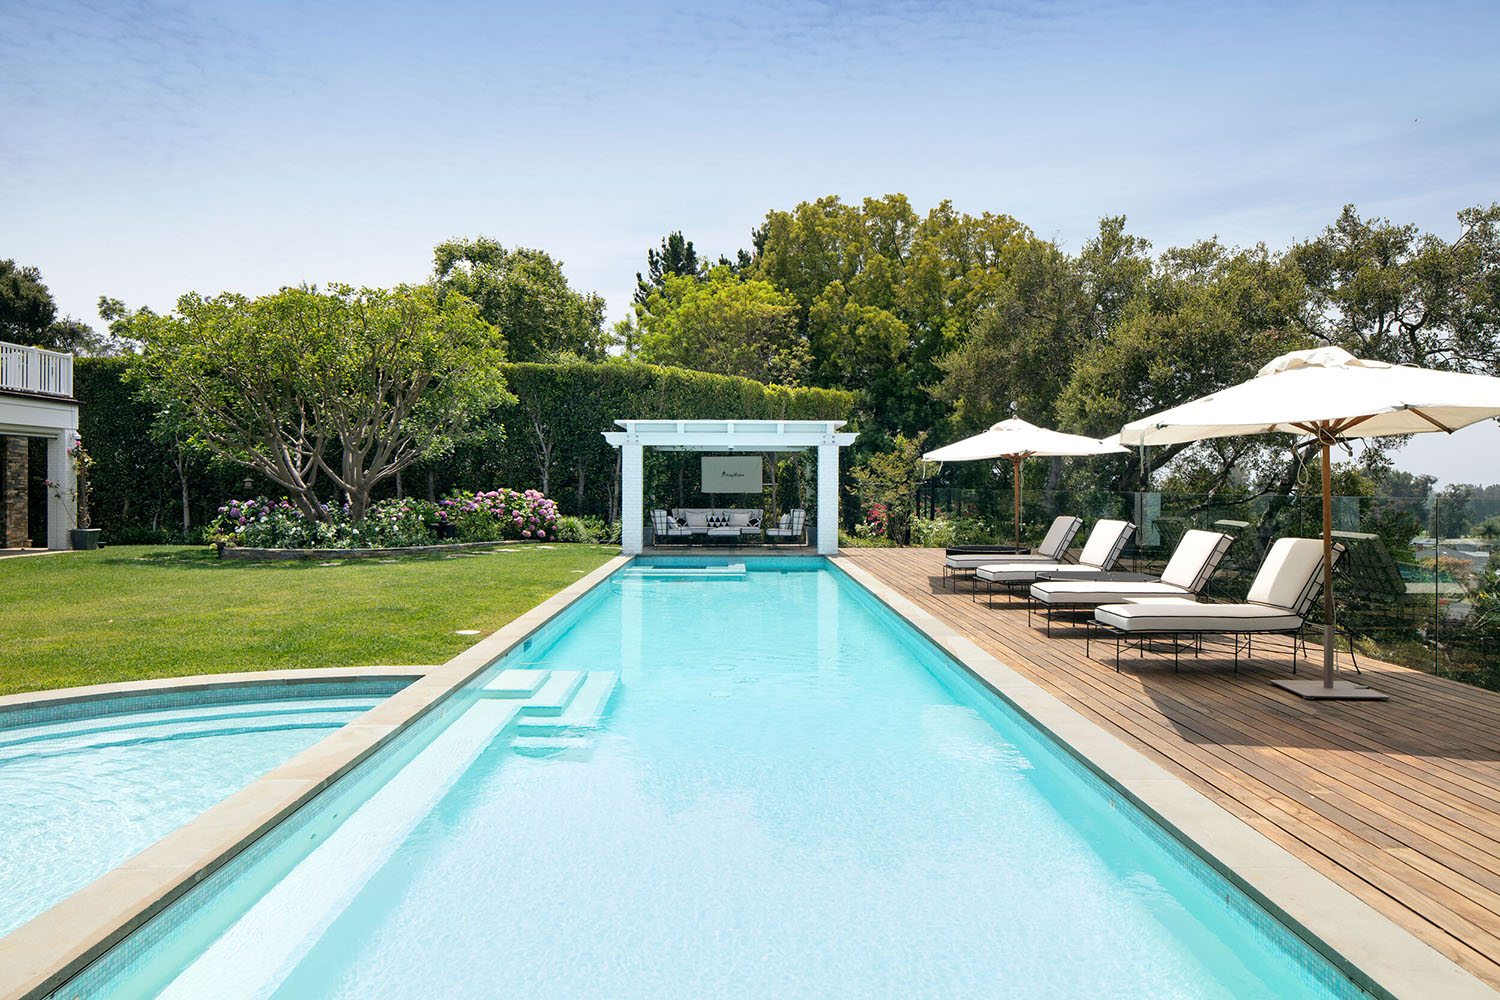 LeBron James Lists Extravagant Los Angeles Home for $20.5 Million - Galerie